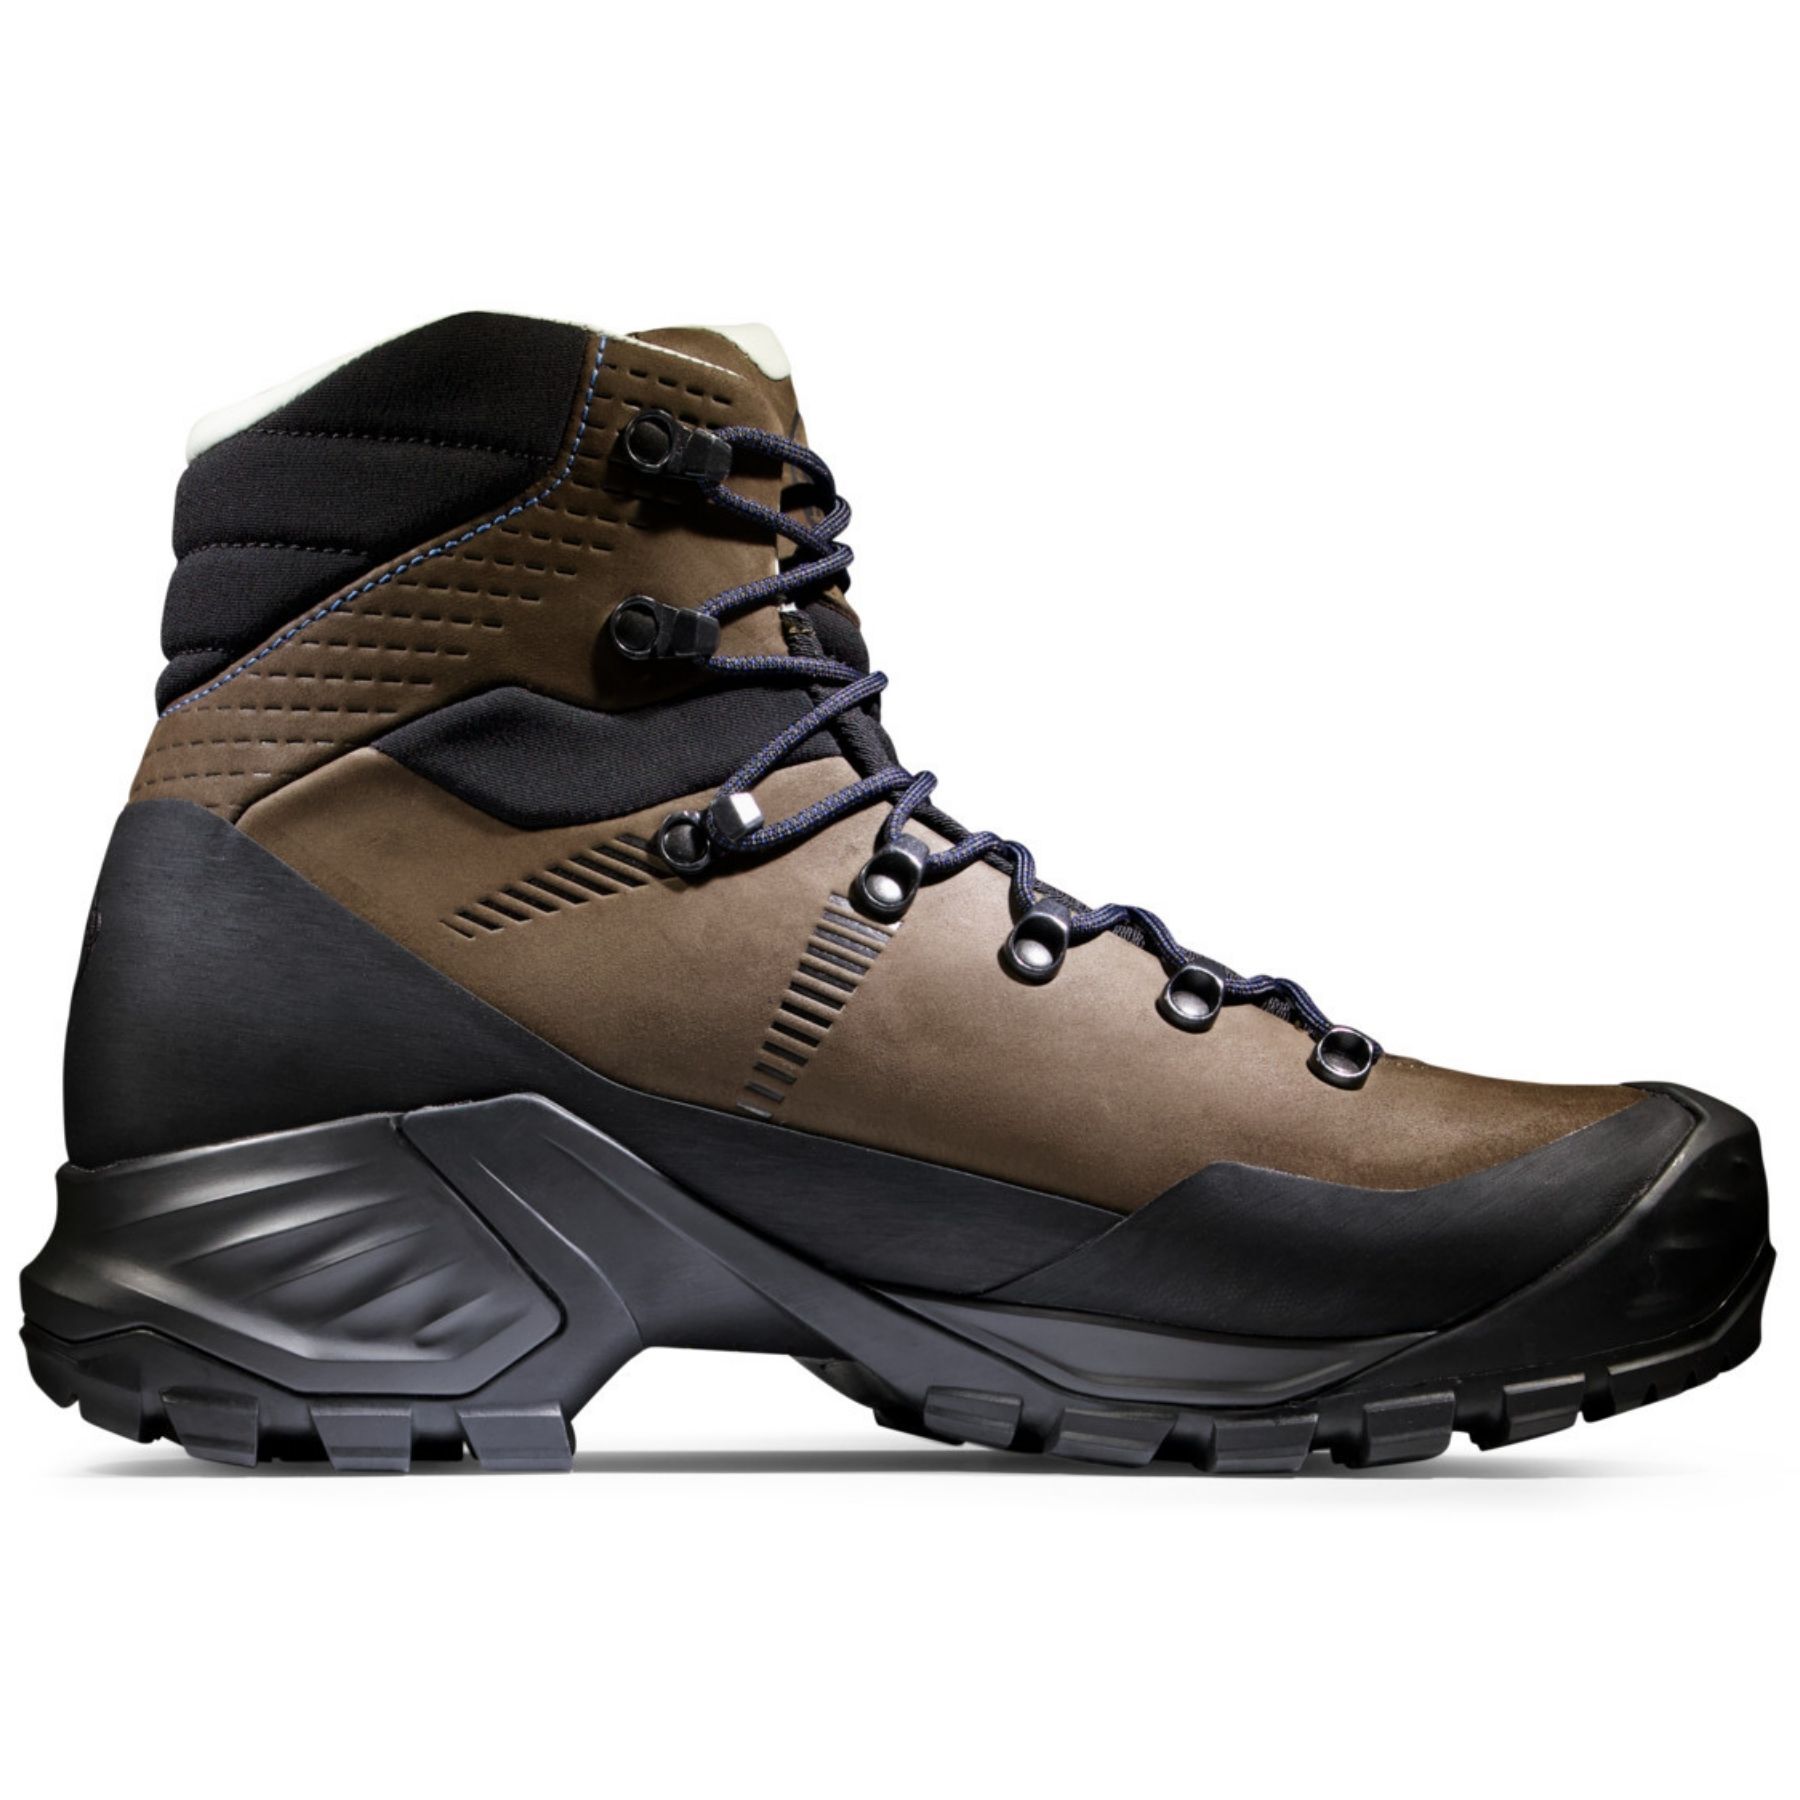 Mammut Trovat Advanced II High GTX - Hiking boots - Men's